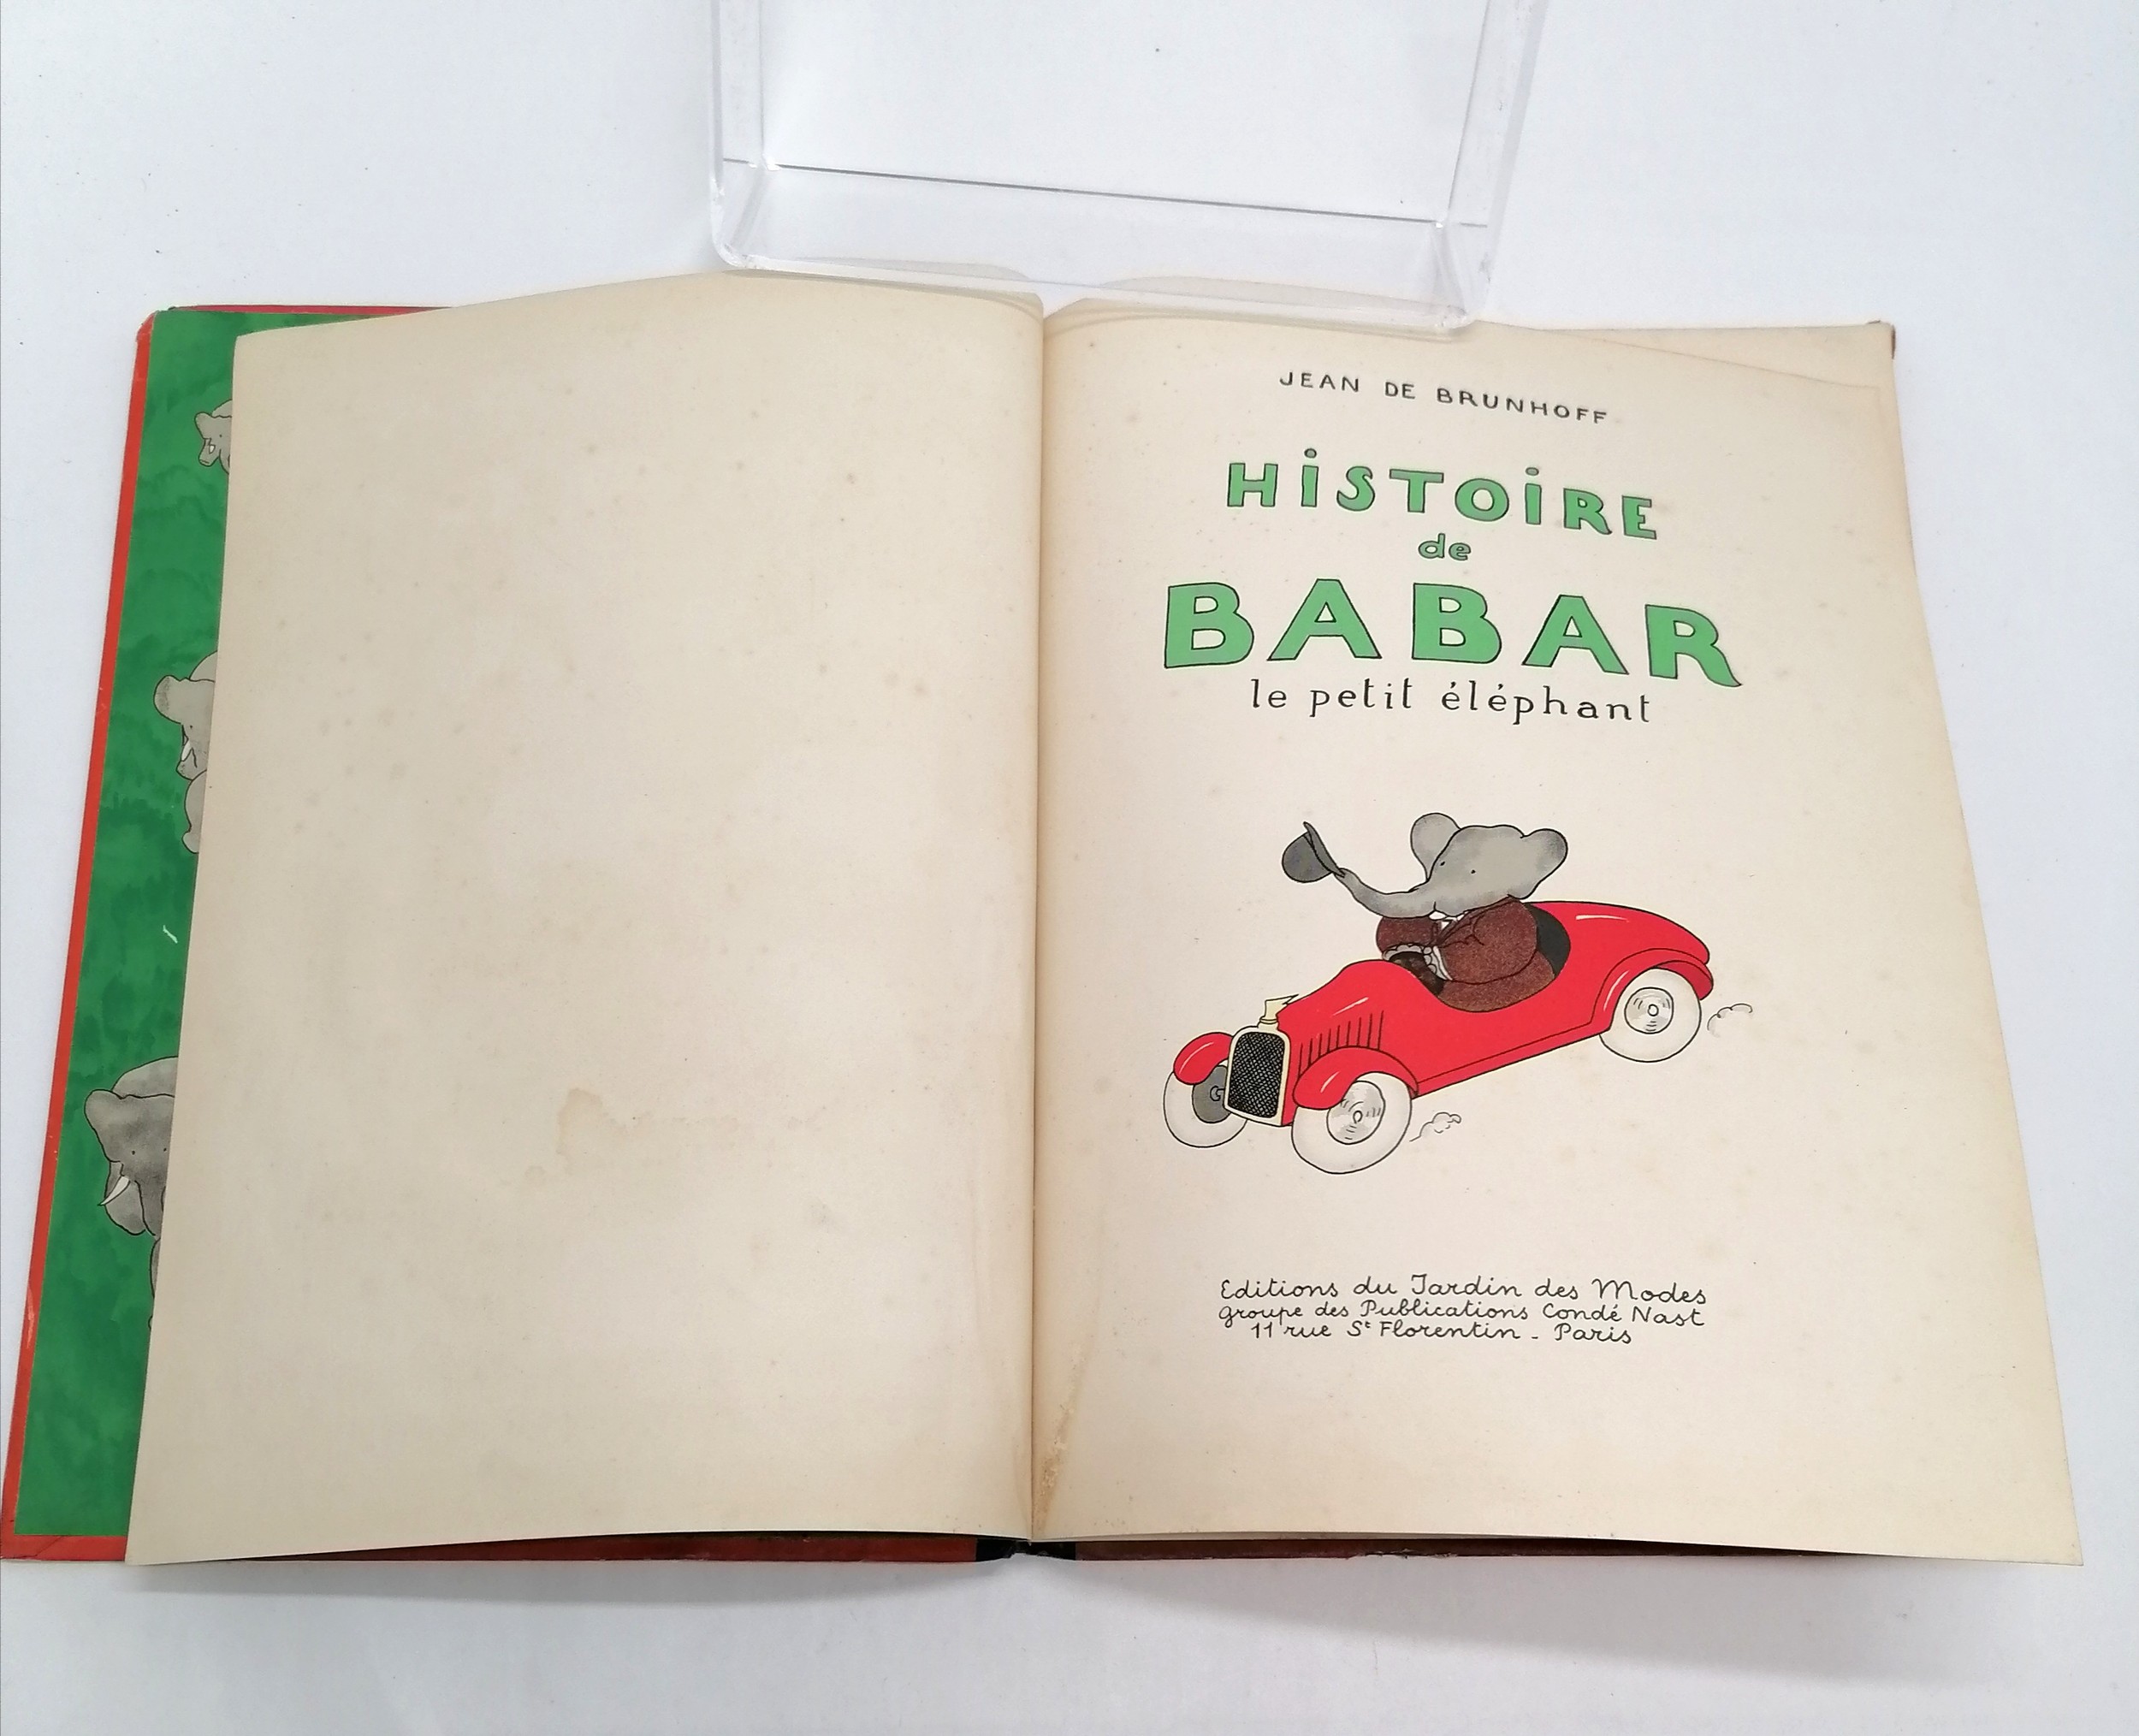 1931 book Histoire de Babar le petit elephant by Jean de Brunhoff (1899-1937) - has some water - Image 2 of 10